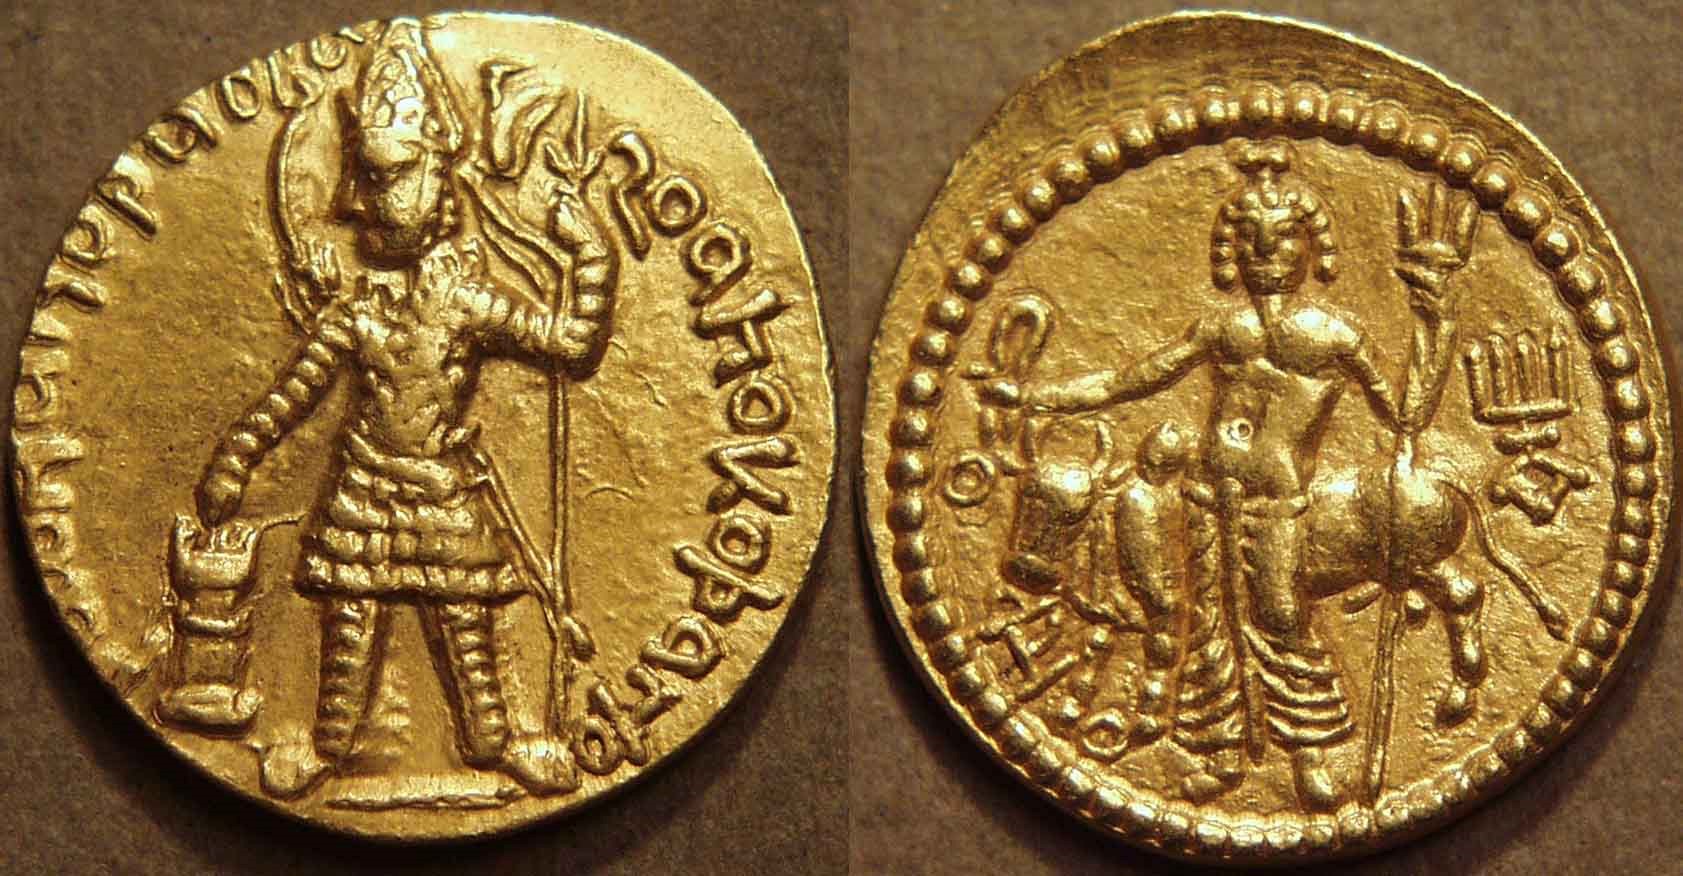 Gold Coin With Lord Shiva & Nandi Design